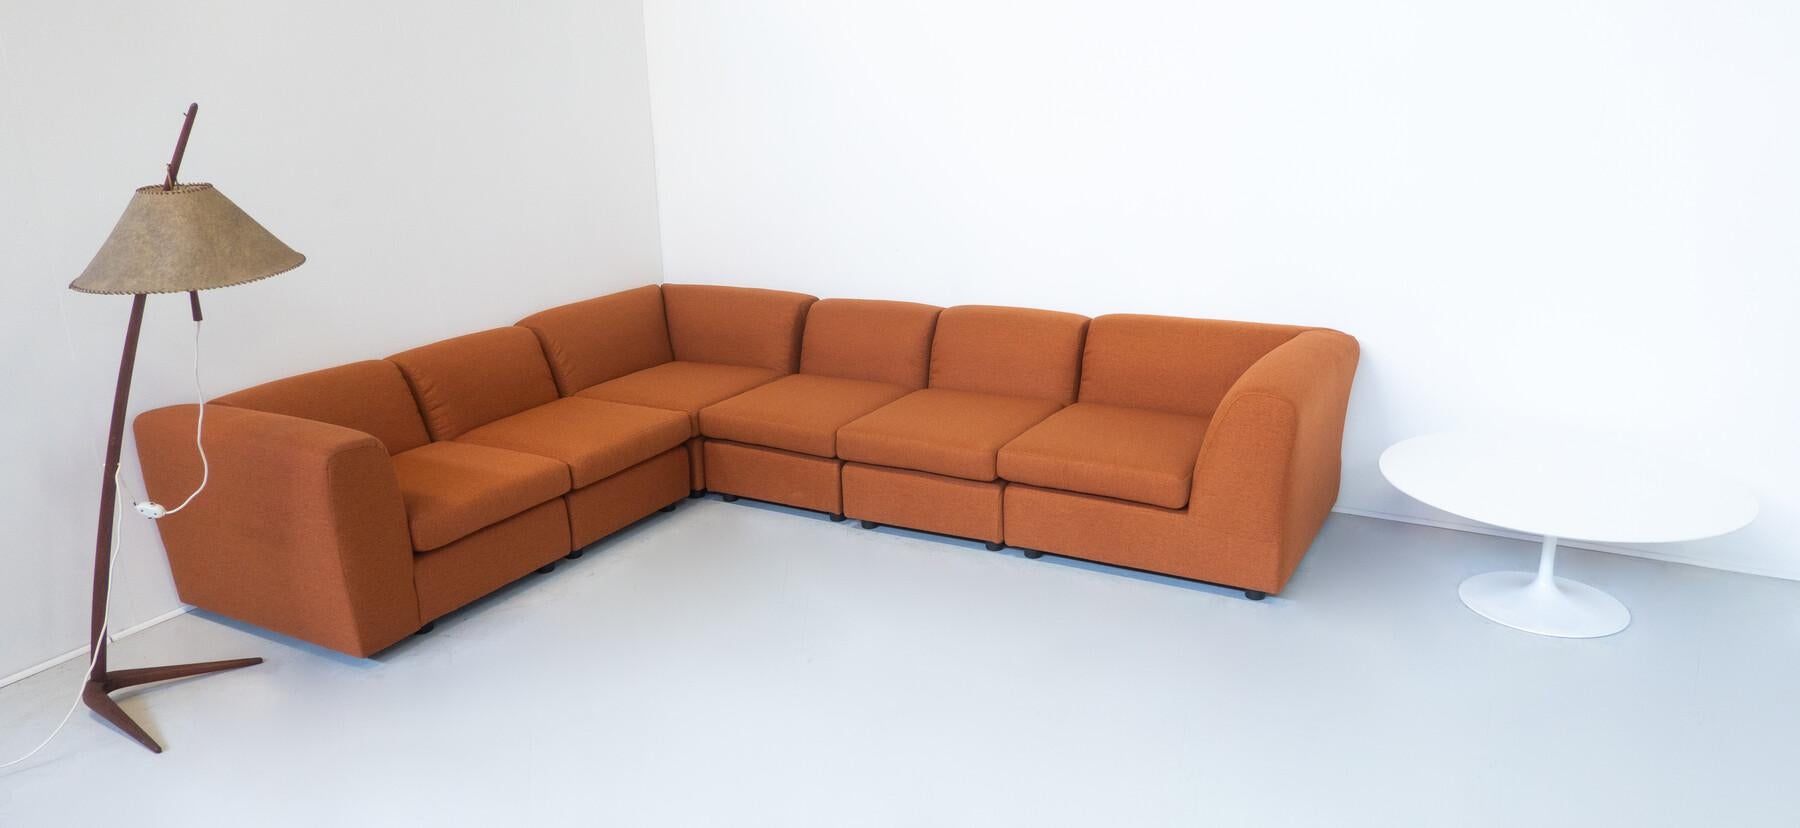 1960's sectional sofa